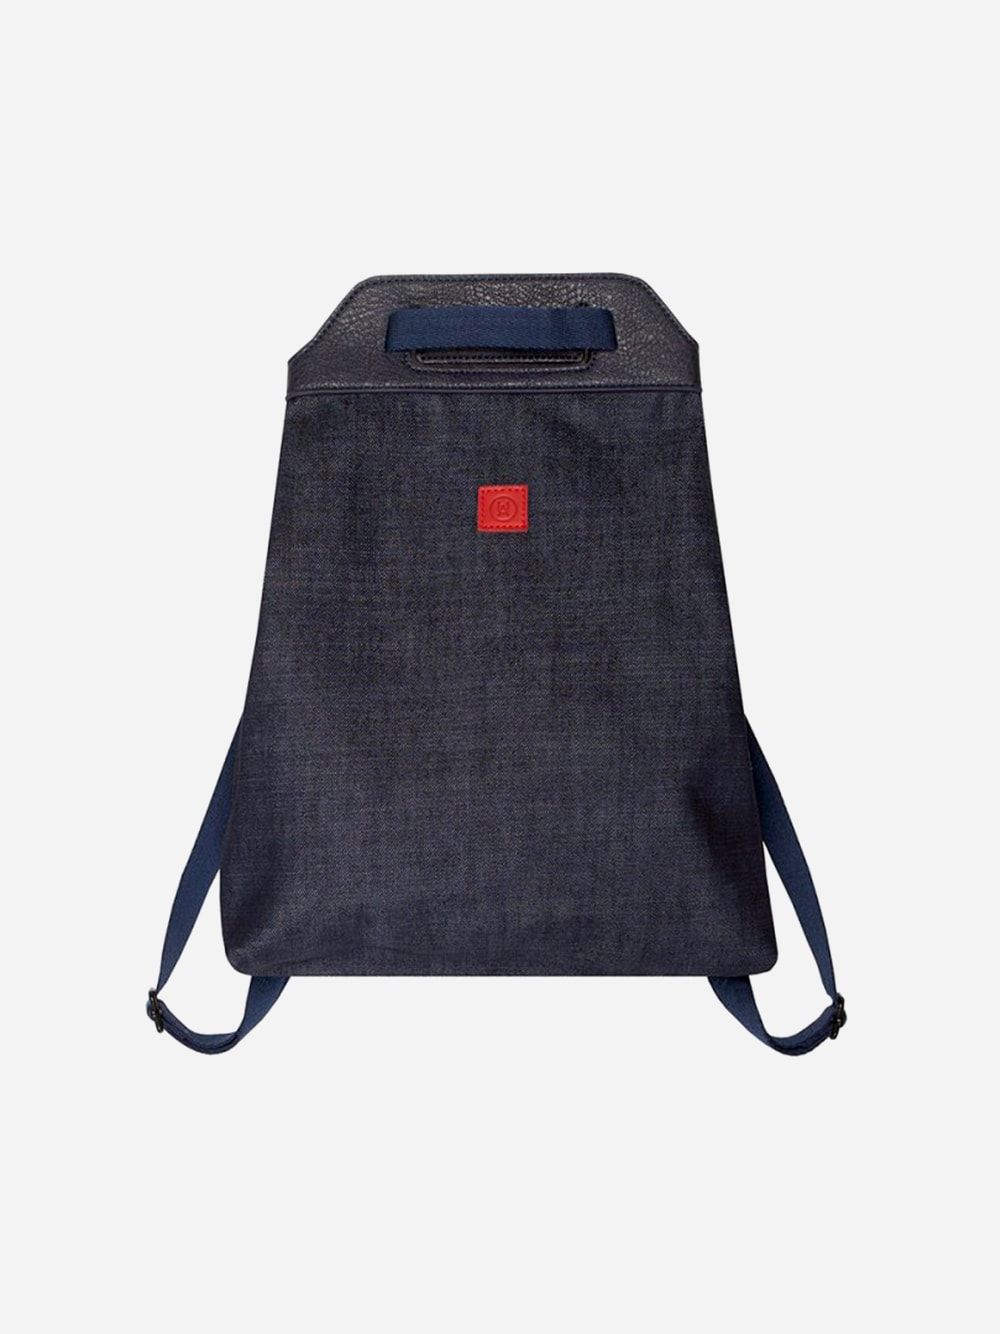 Cara Blue Shoulder Bag | Ucon Acrobatics